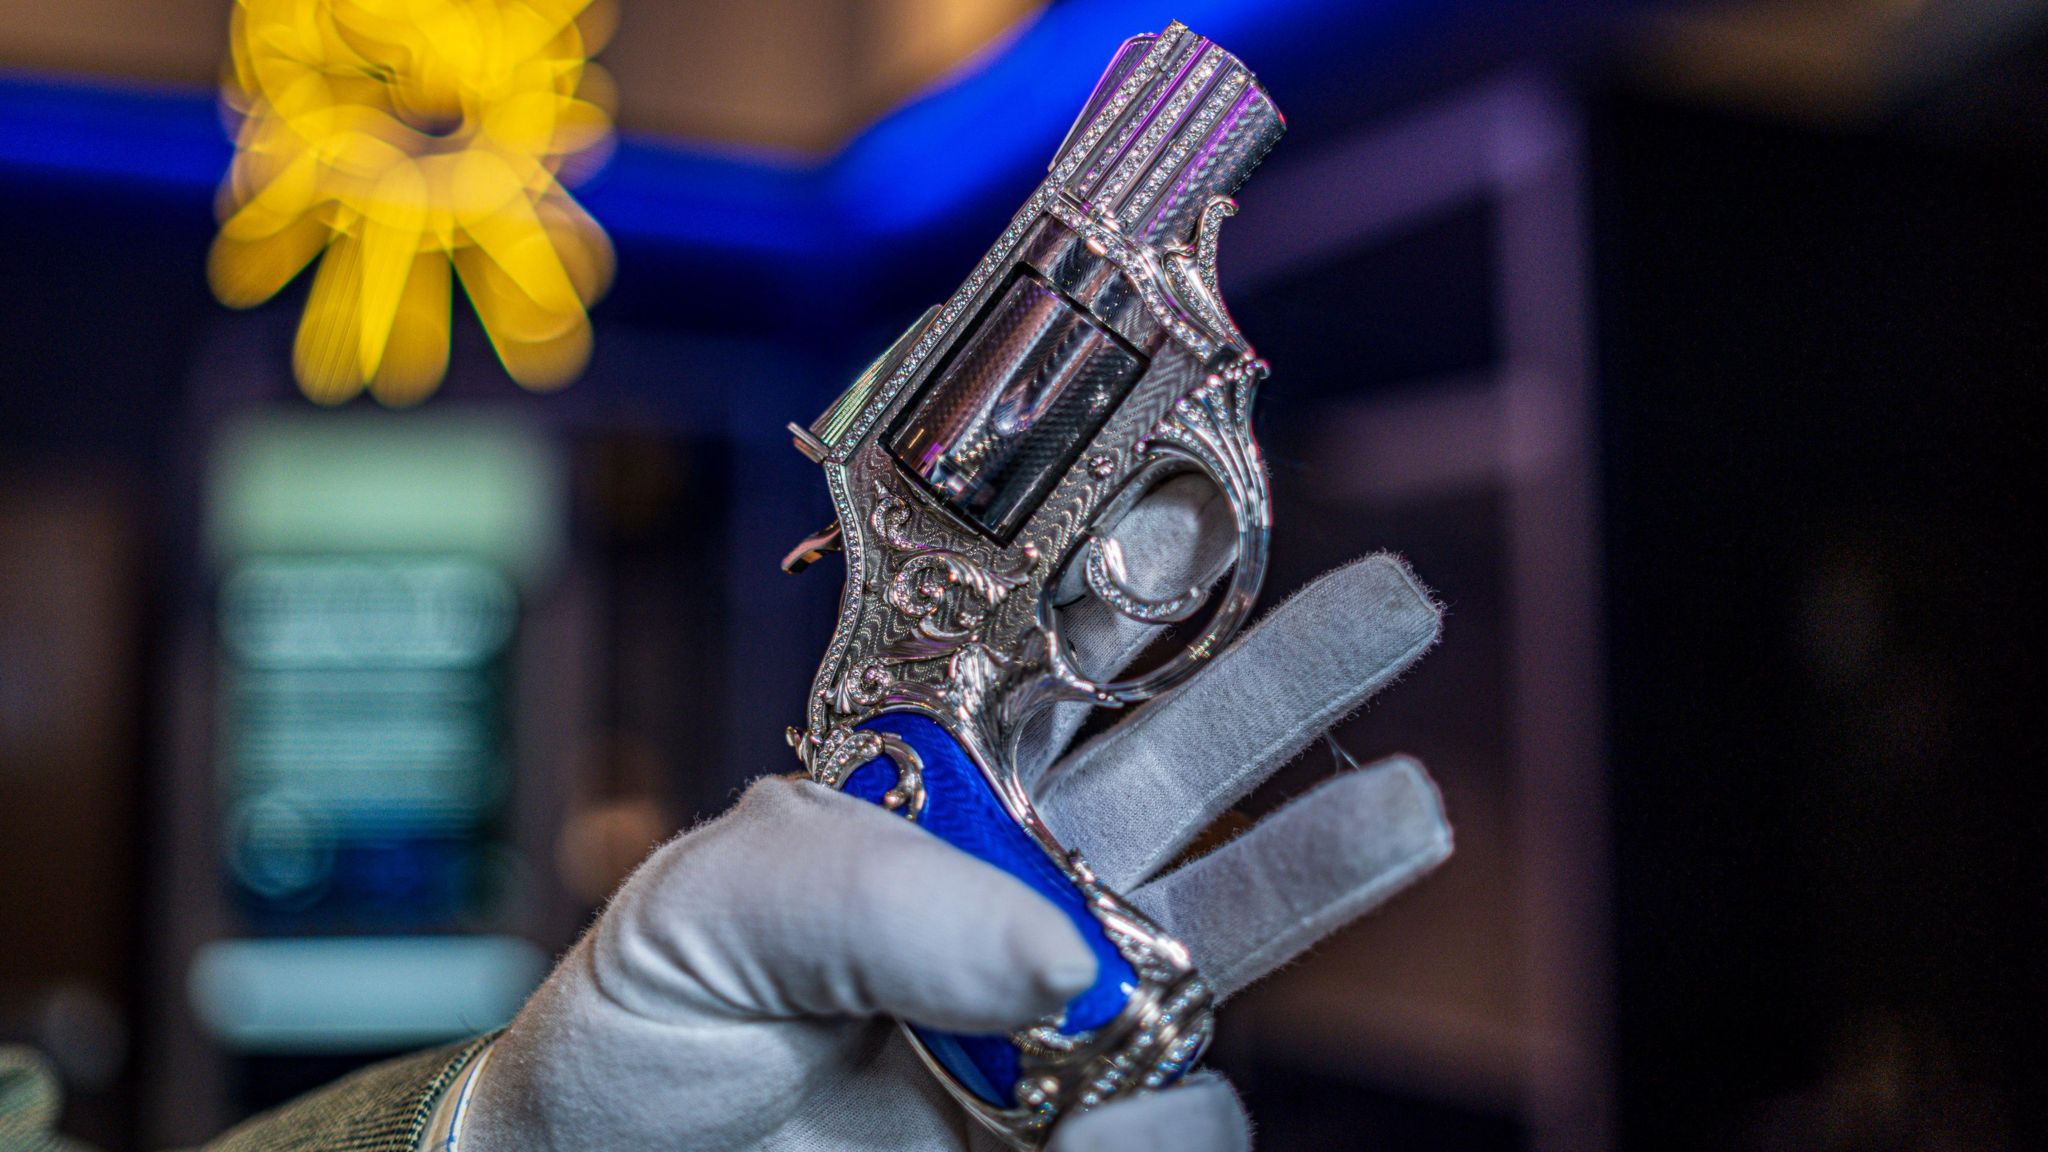 The diamond-encrusted Smith & Wesson revolver